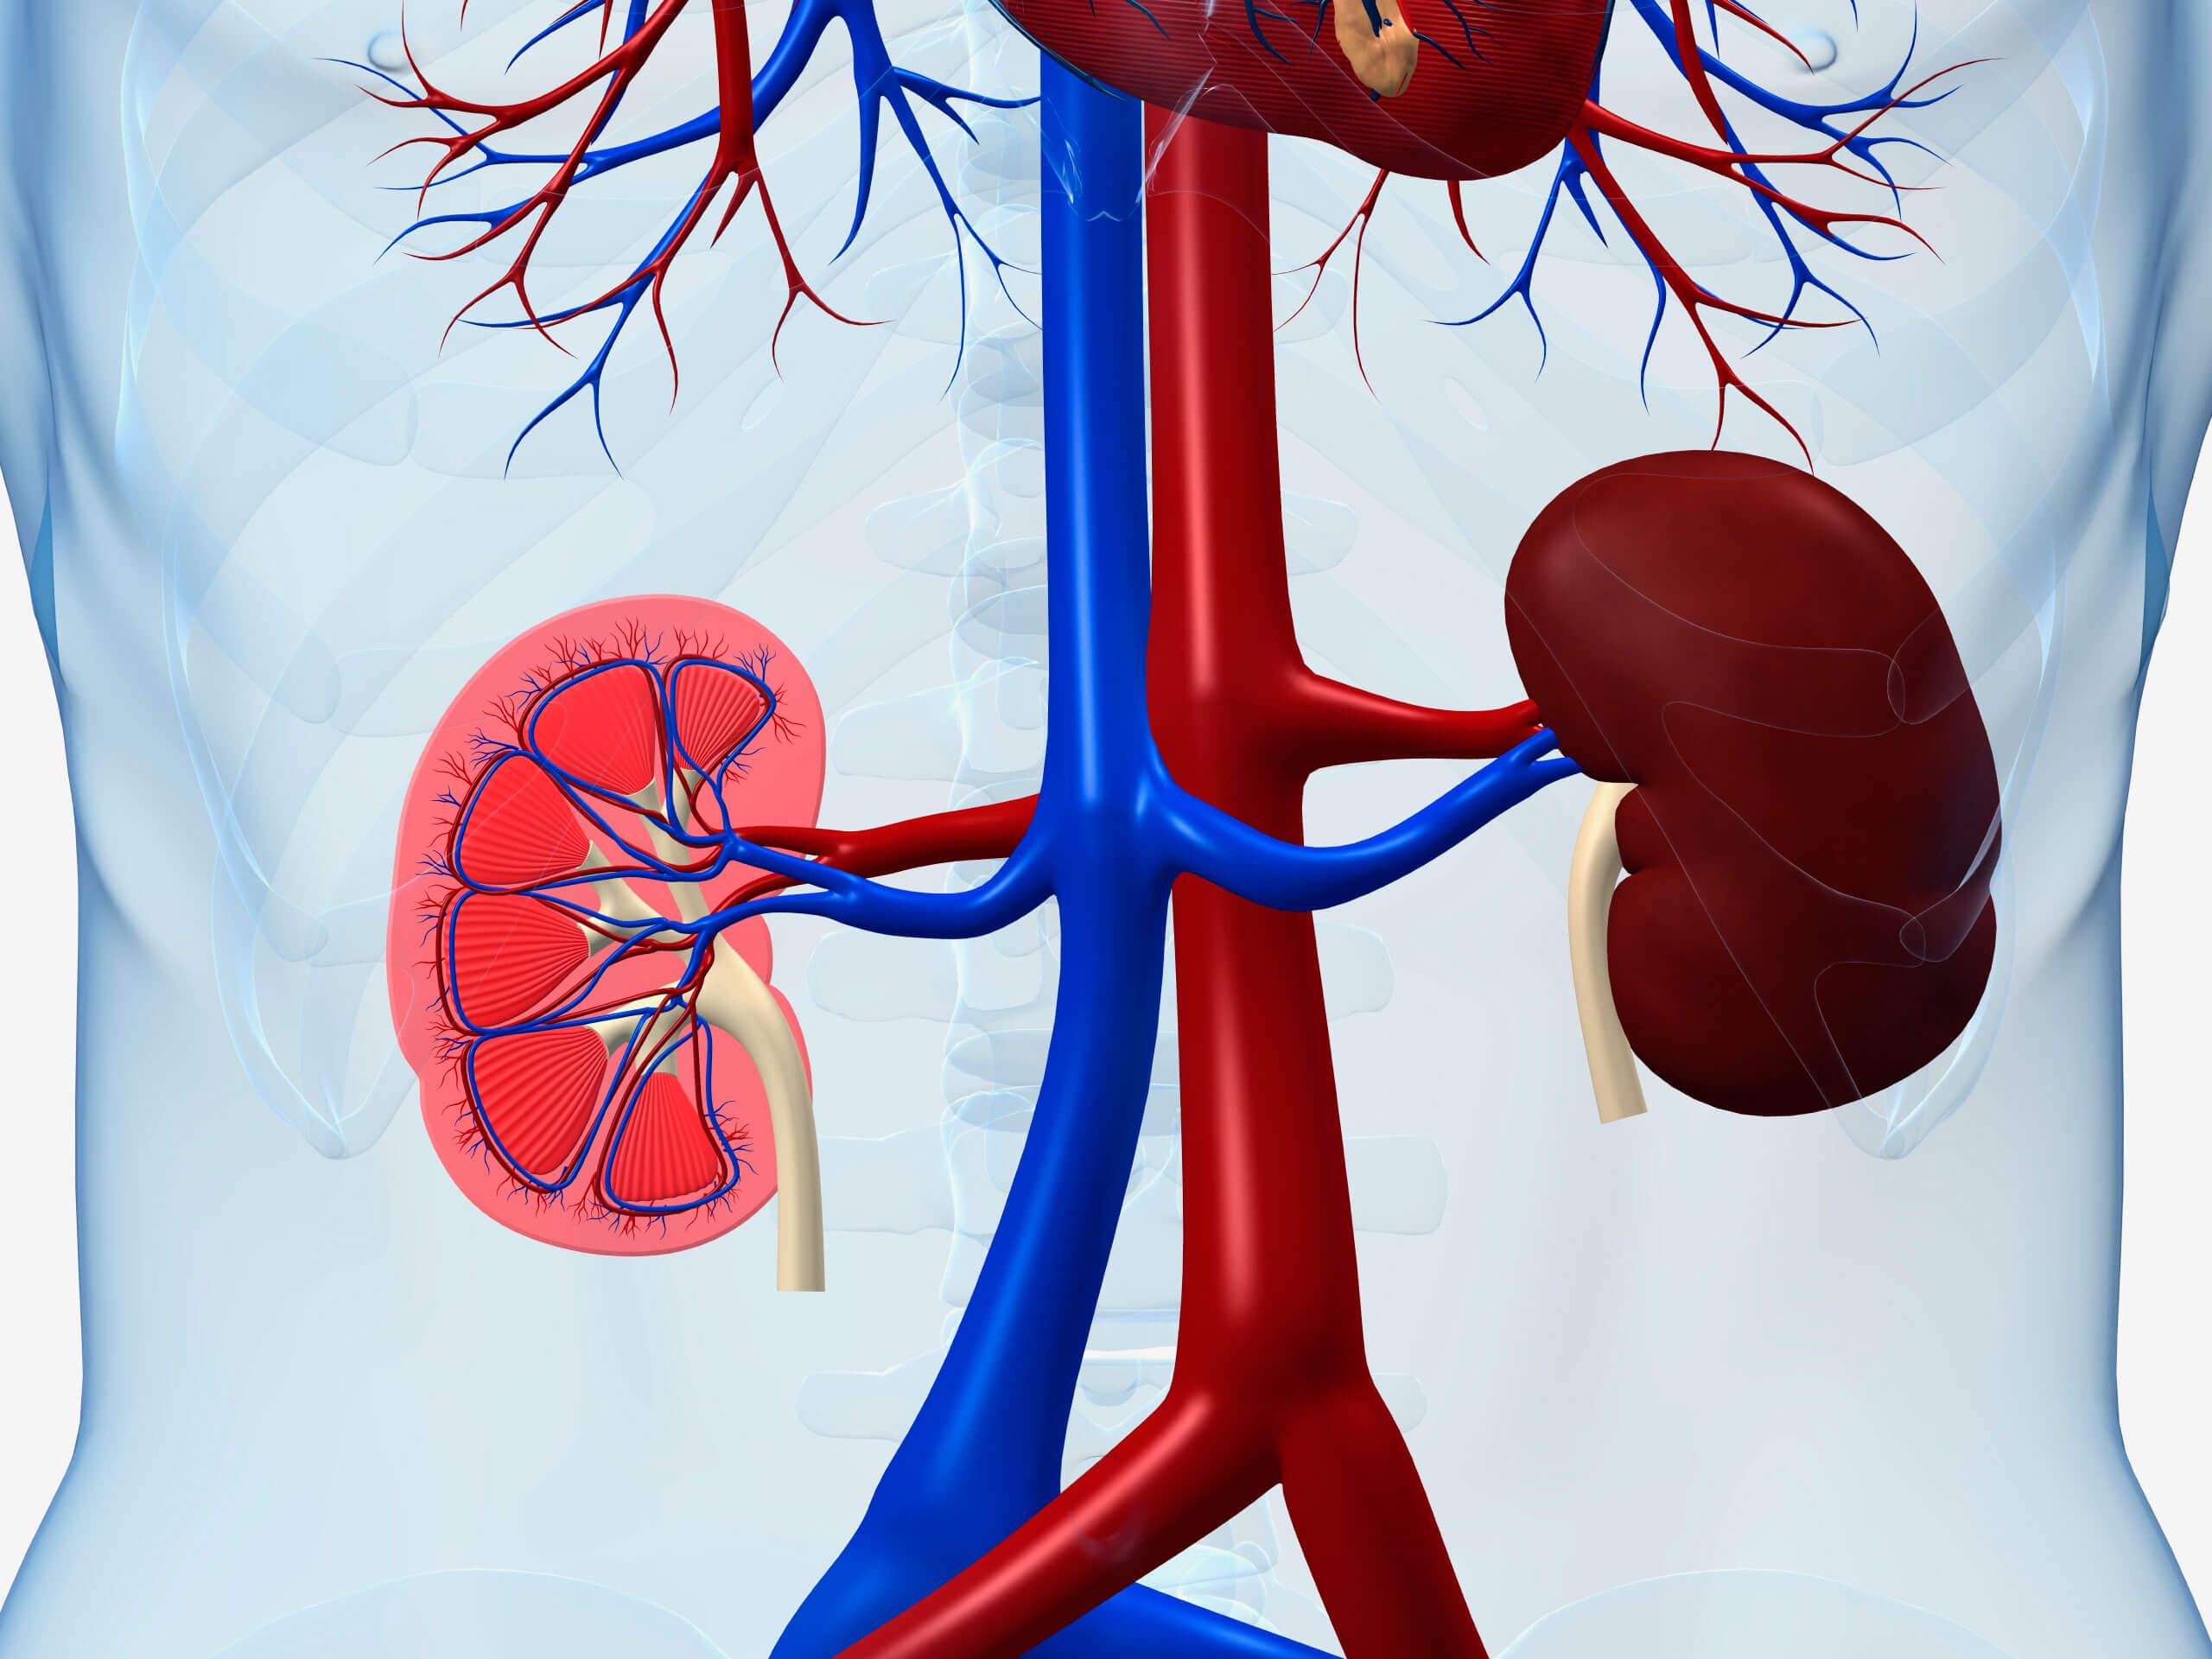 Blood Pressure Control via Kidney Functionality